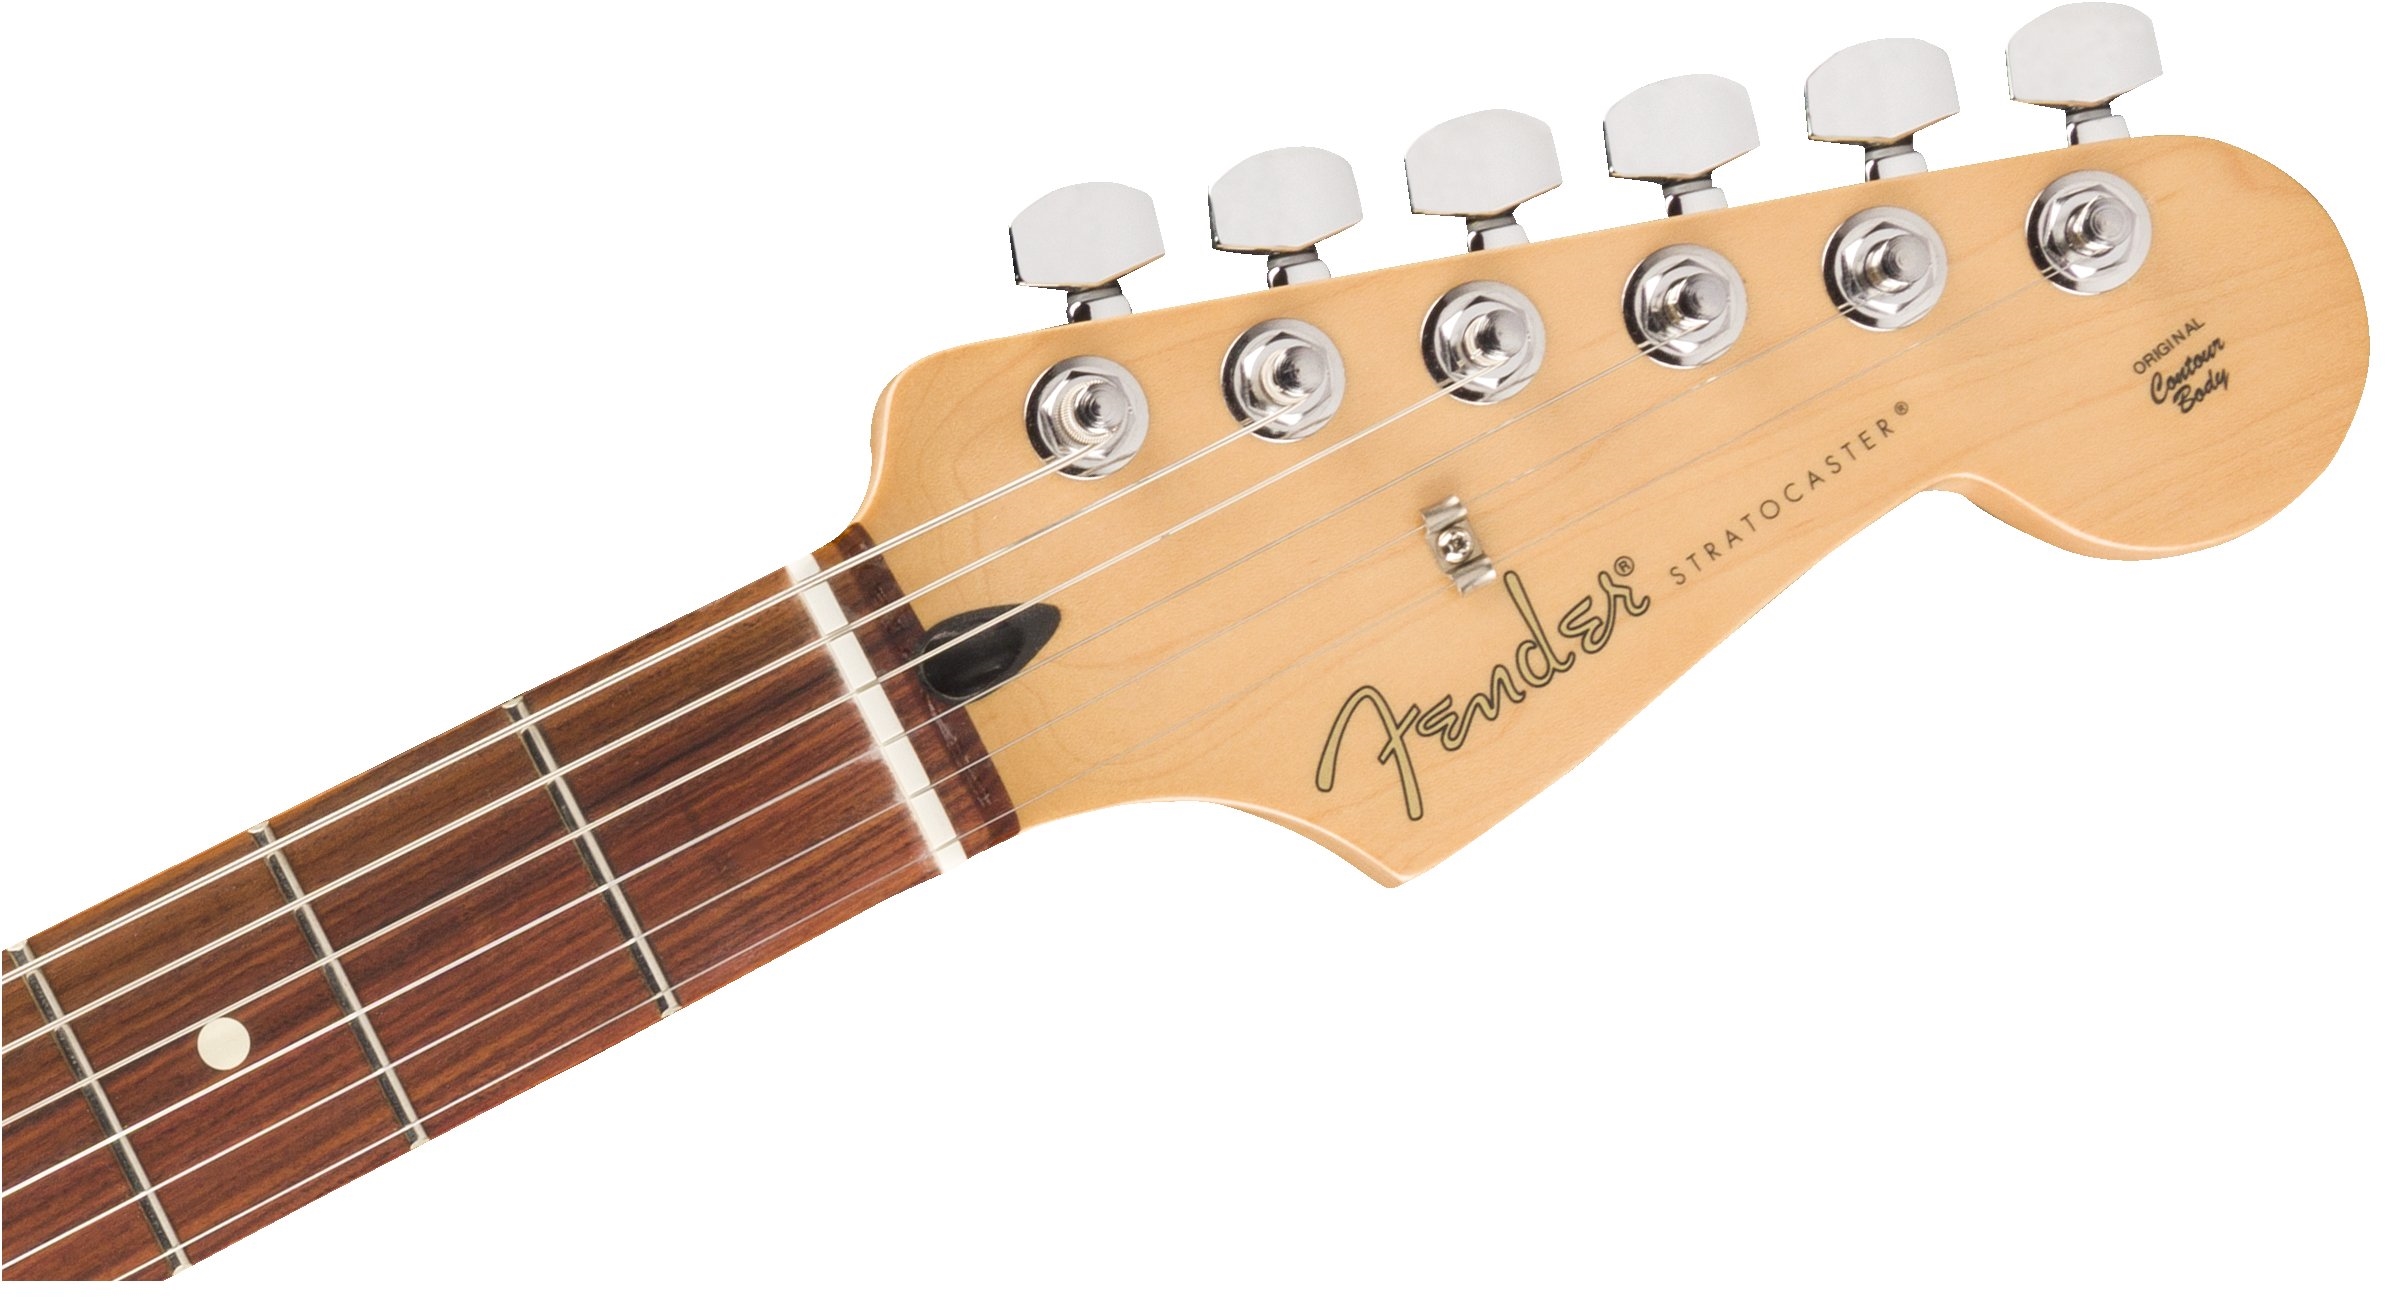 Fender Strat Player Ltd Mex 3s Trem Pf - Fiesta Red - Str shape electric guitar - Variation 4